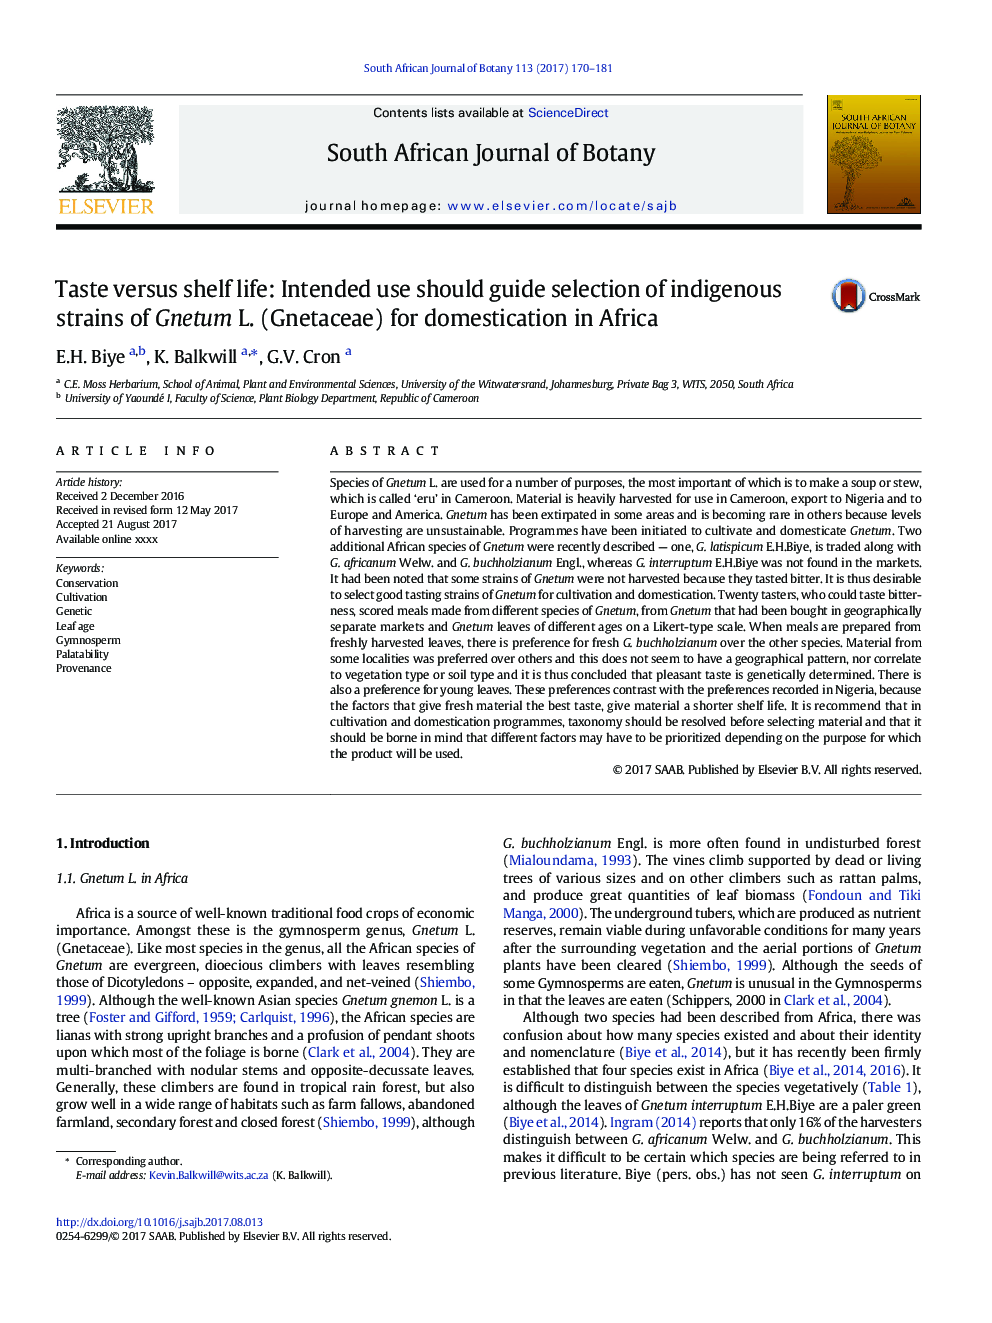 Taste versus shelf life: Intended use should guide selection of indigenous strains of Gnetum L. (Gnetaceae) for domestication in Africa